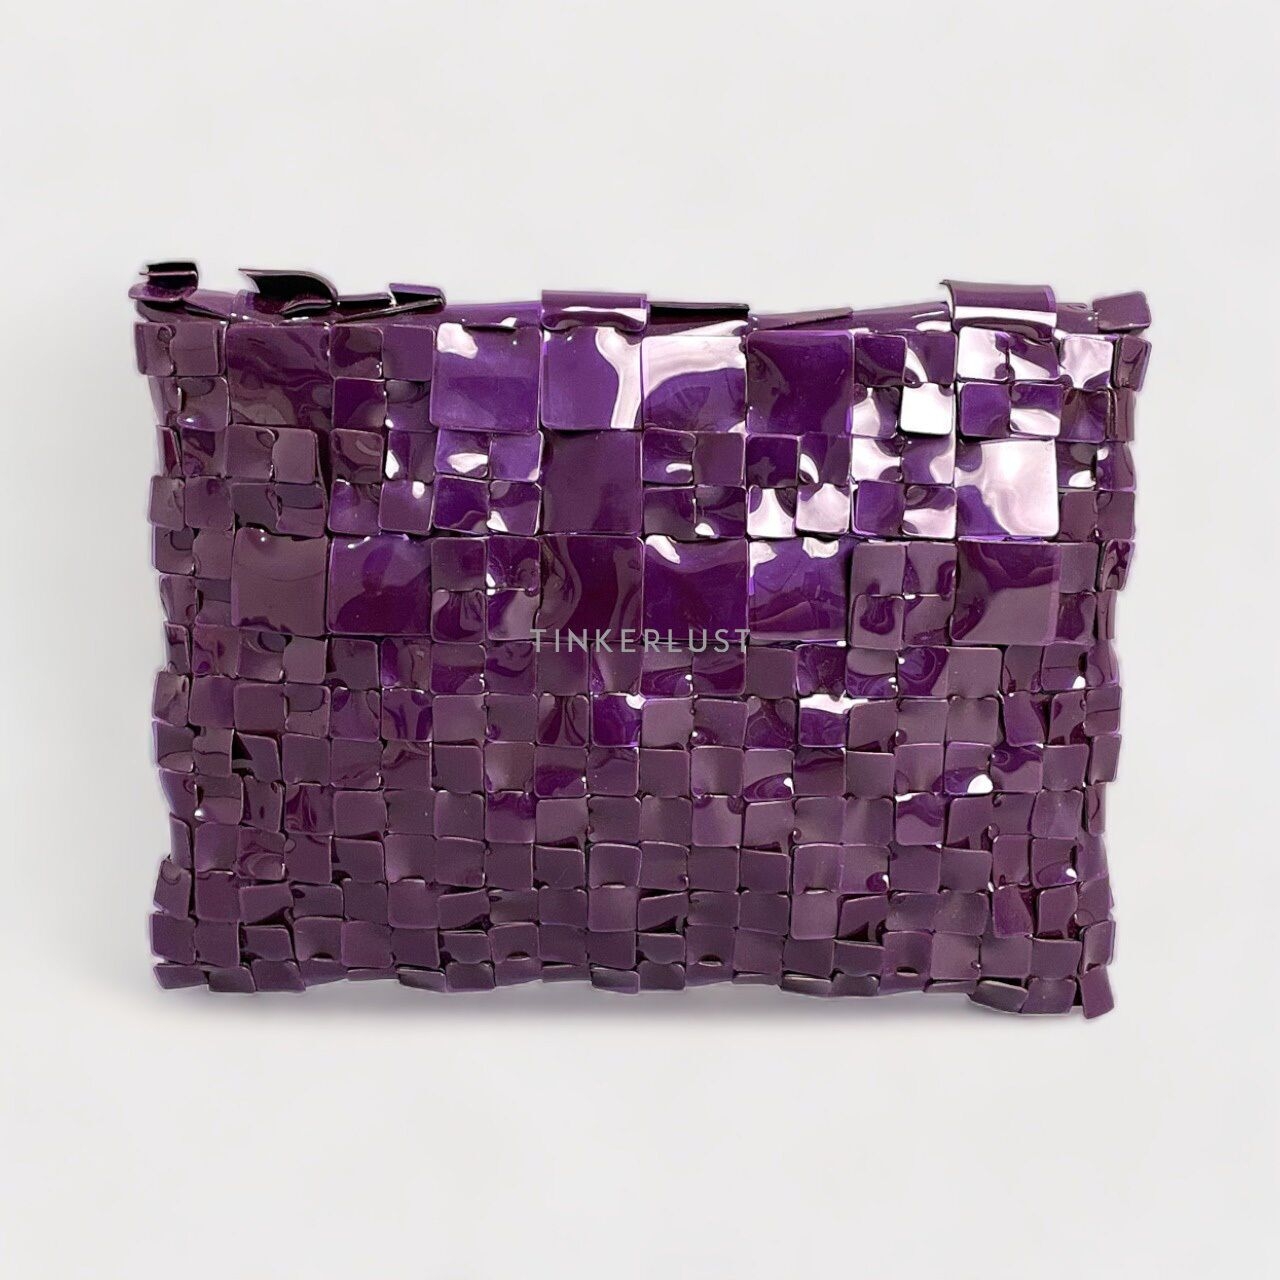 BYO Purple Clutch